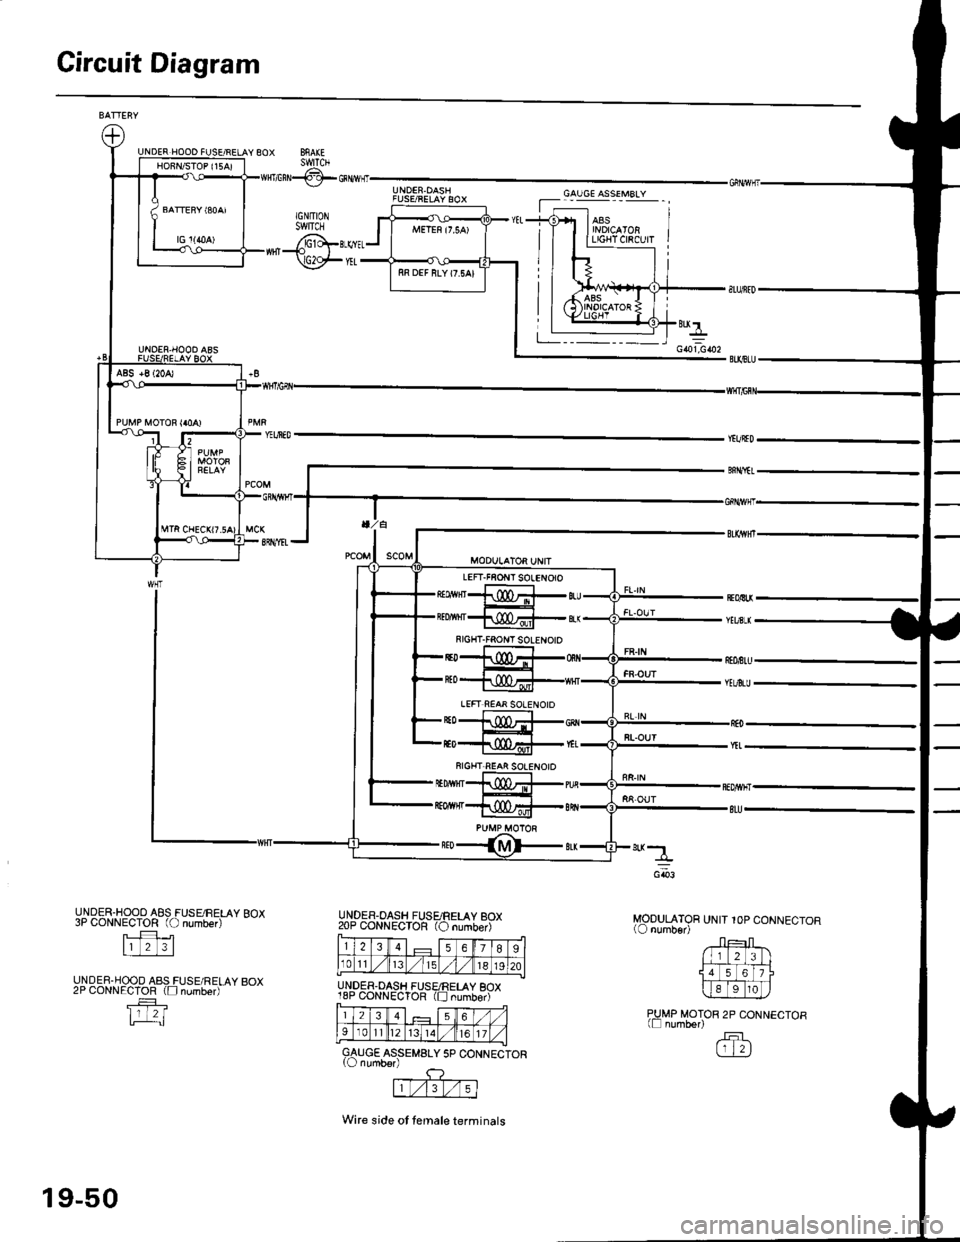 HONDA CIVIC 2000 6.G Workshop Manual Gircuit Diagram
MOOULATOR UNIT IOP CONNECTOR
zrJrF!_lll 2 3ll
14TiEltl
c@4
PIMP MOTOR 2P CONNECTOR(Ll number)fFlGTN
UNDER.HOOO A8S FUSE,/FELAY BOX3P CONNECTOR (O number)
| 2 3l
UNDER.HOOD AAS FUSE/REL